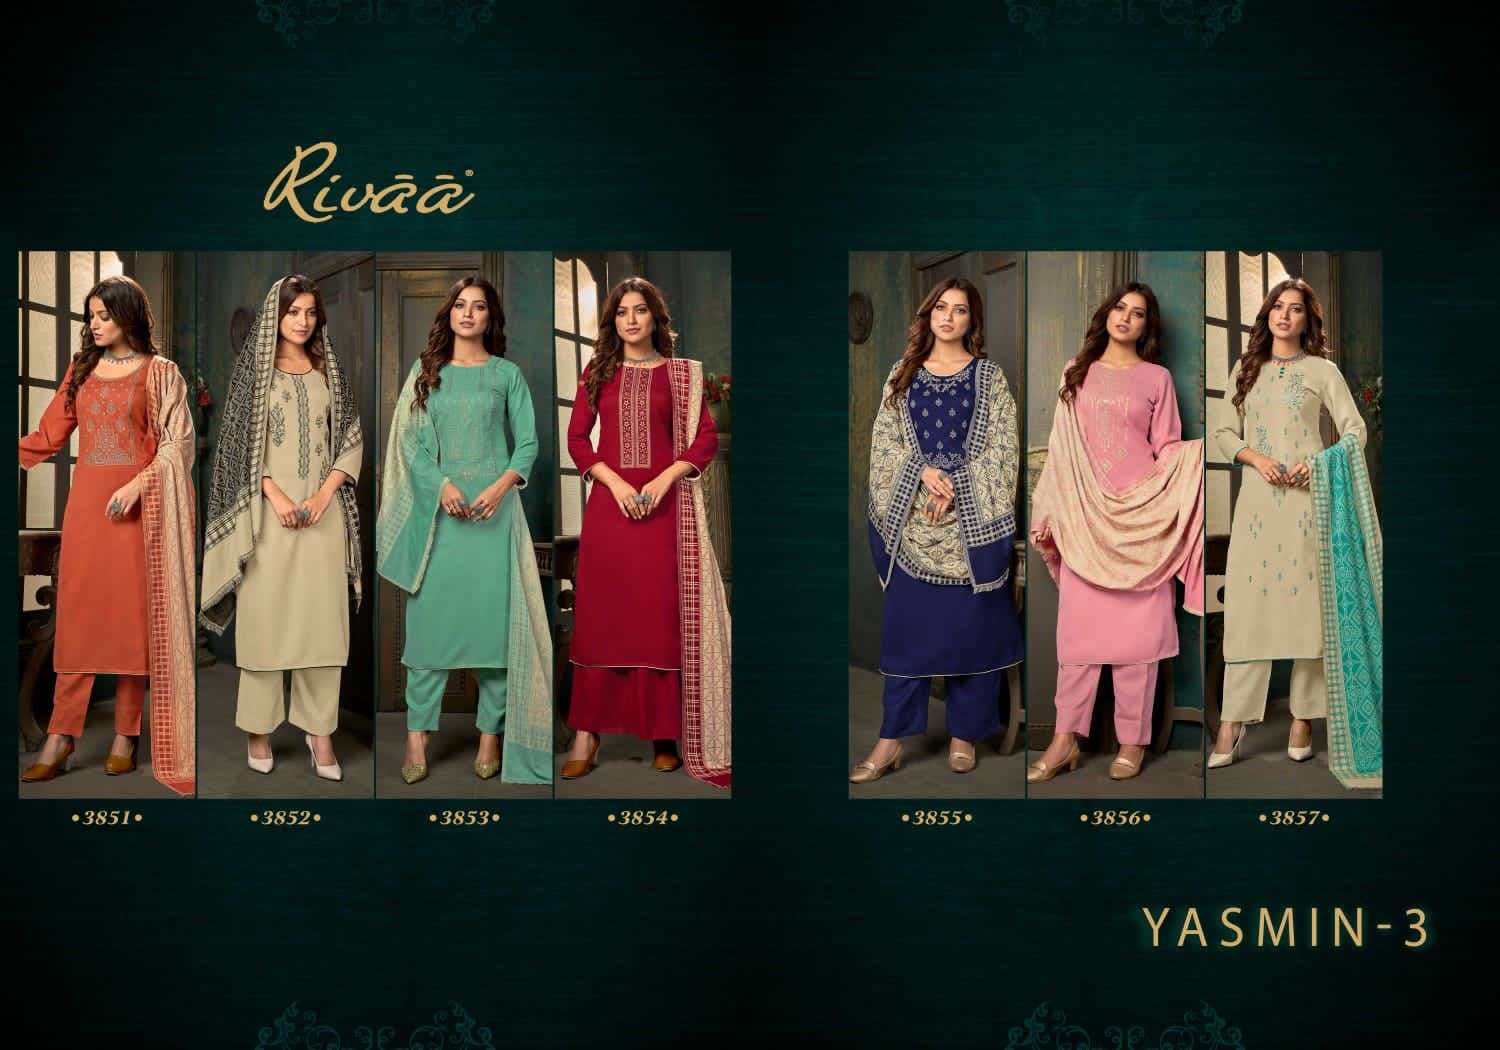 rivaa exports yasmin vol 3 3851-3857 series heavy pashmina designer suits catalogue wholesaler surat